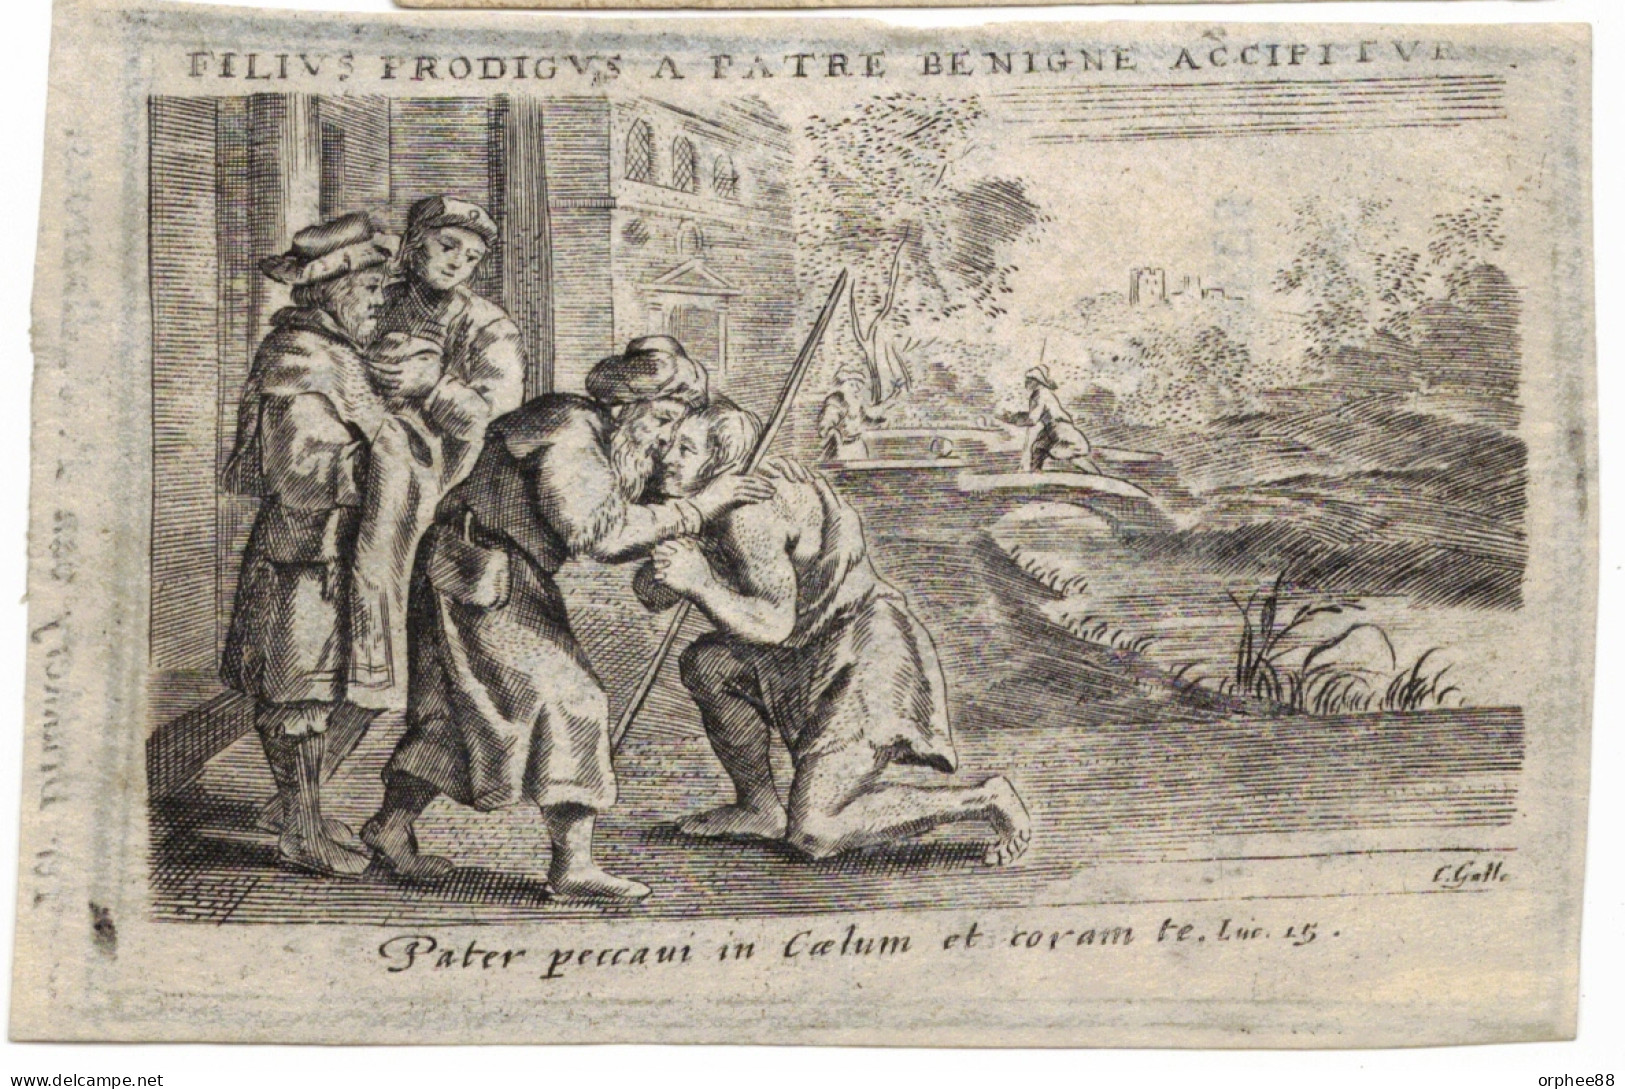 Bloemsaat Joannes Amsterdam 1741 + Turnhout 1828 Perkament, Parchemin, Gravure Anversoise - Overlijden